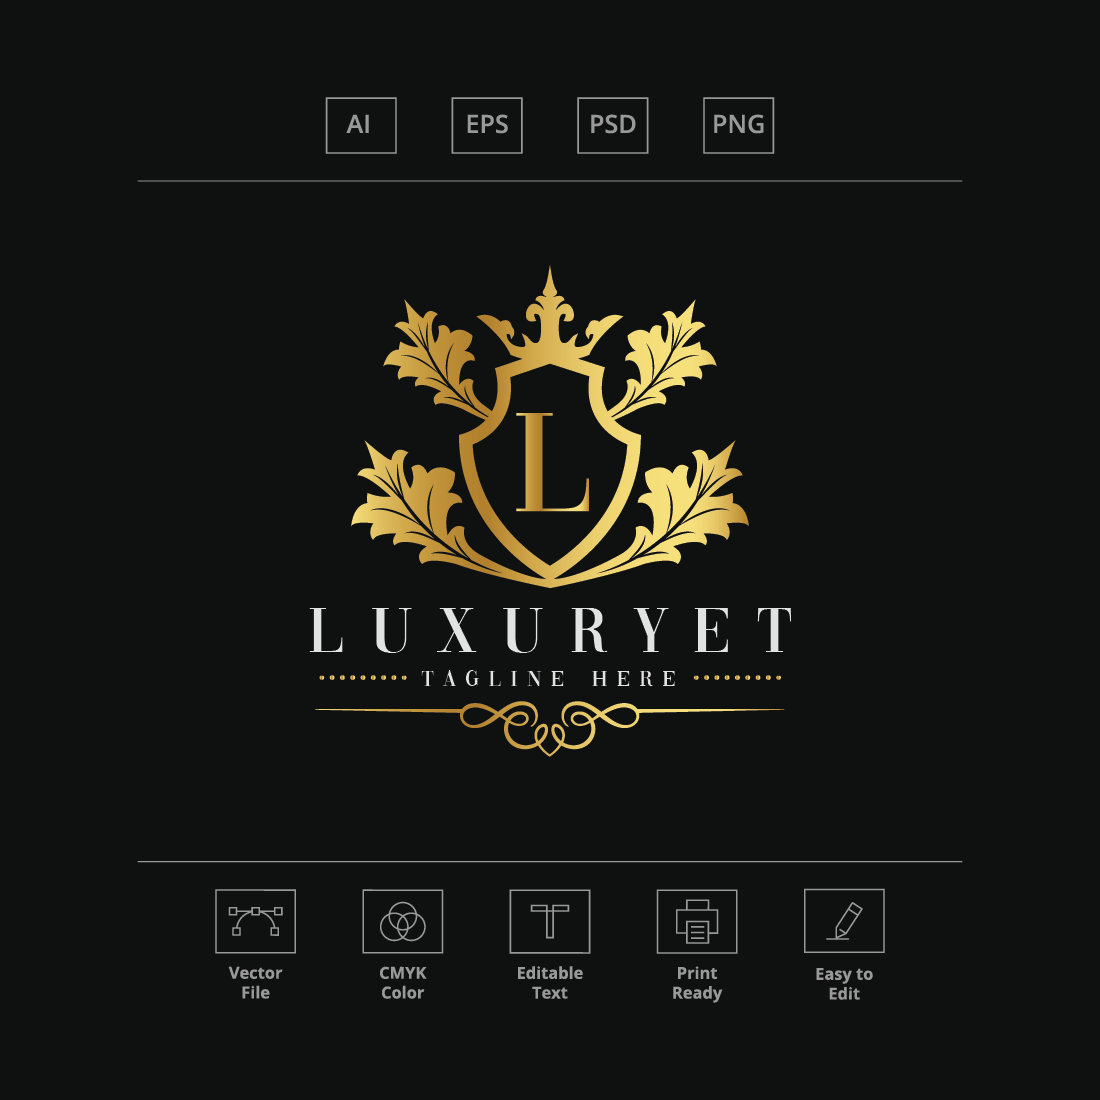 Luxuryet Letter L Logo preview image.